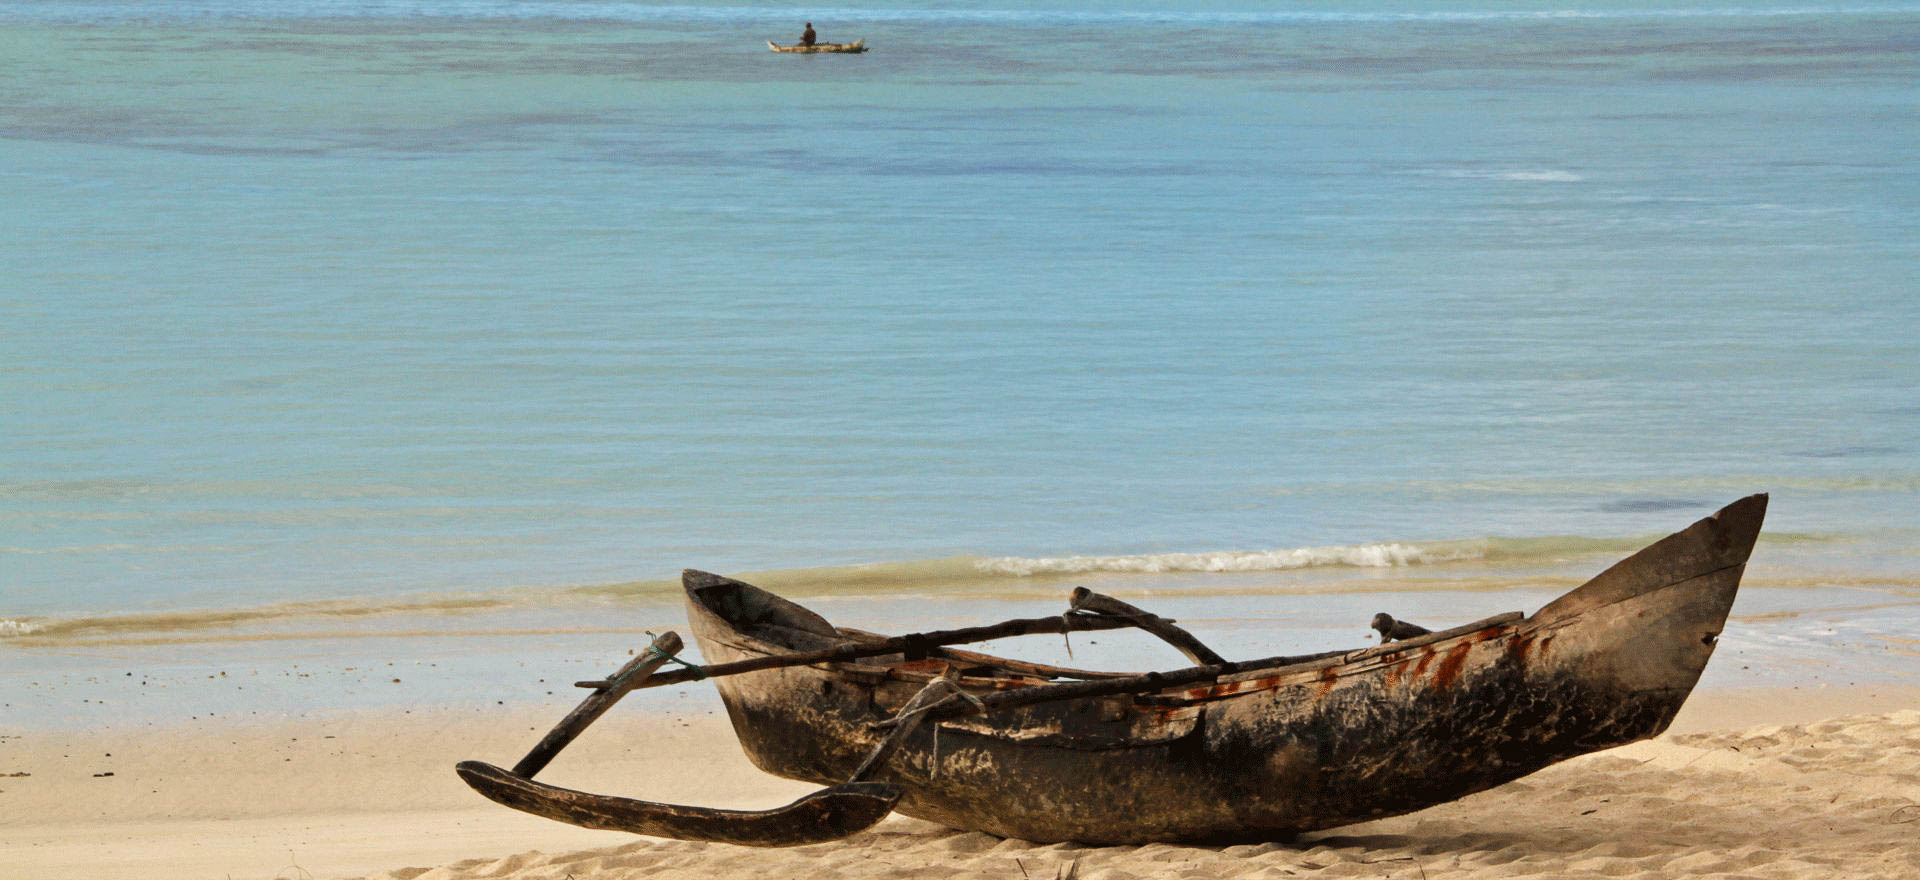 Indian Ocean beach - Comoros Holidays and Tours